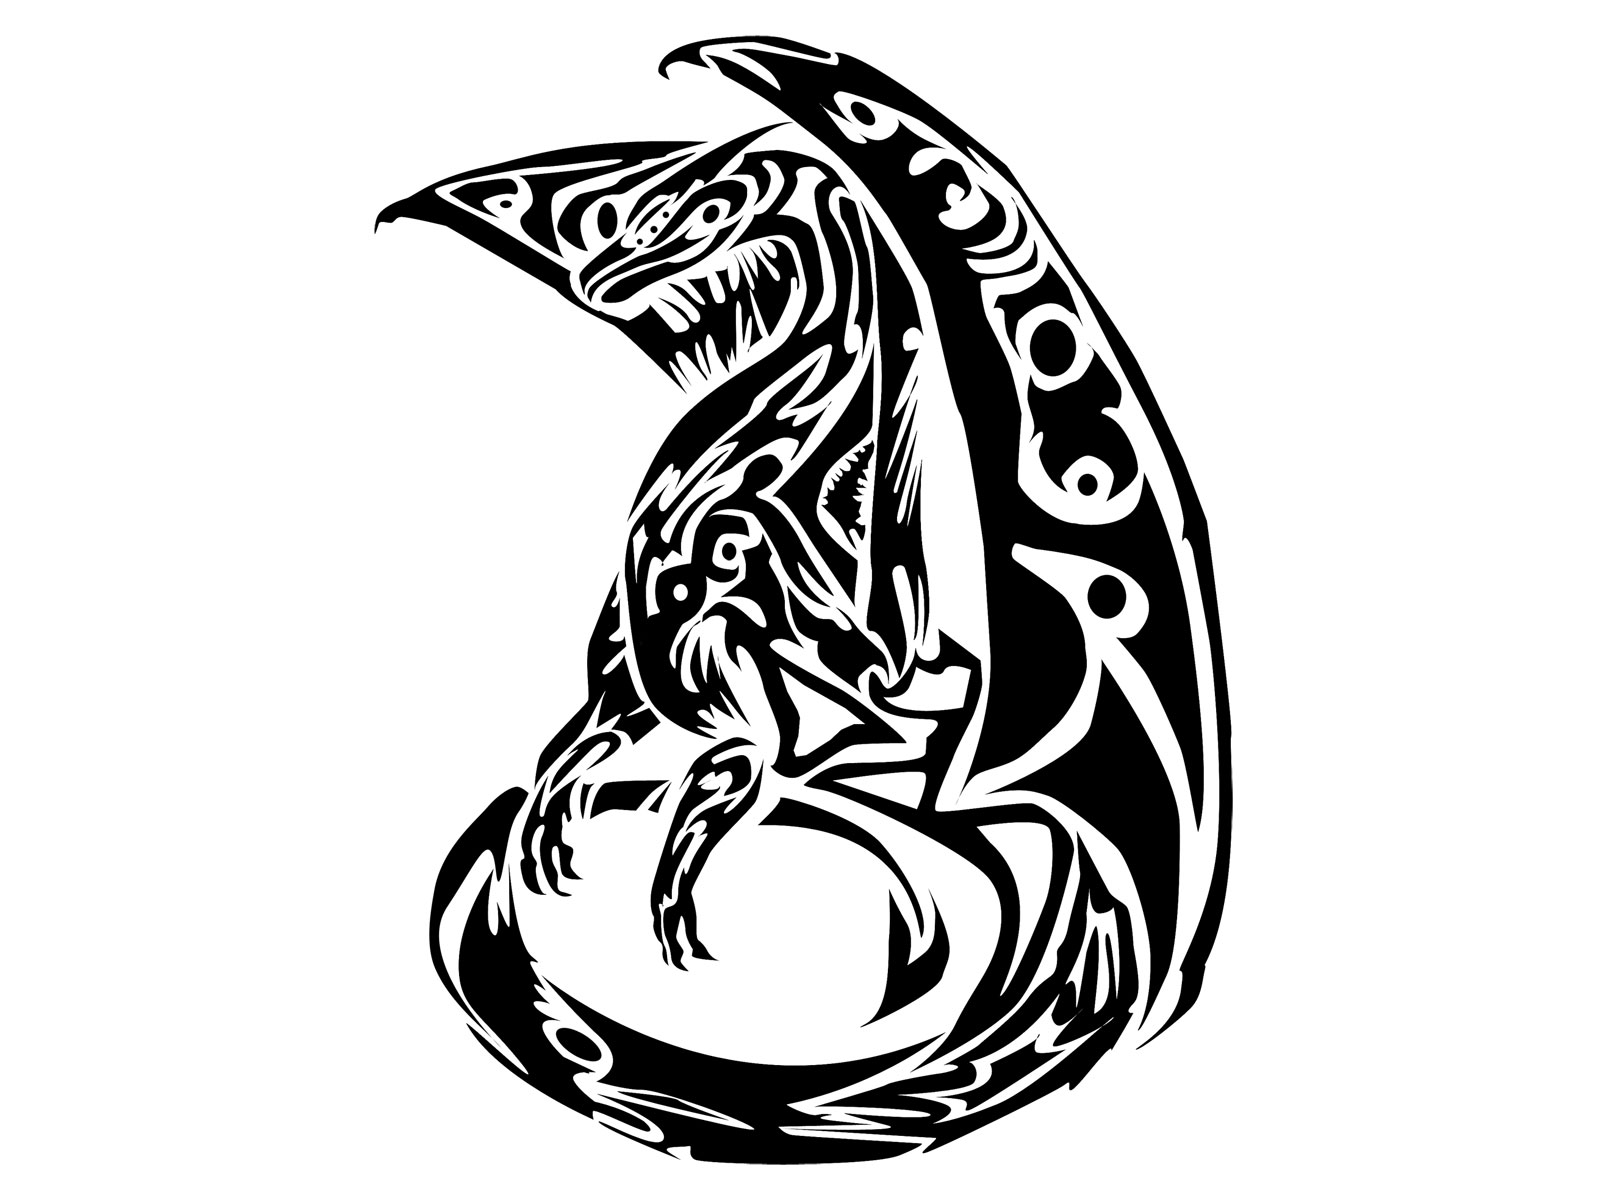 Free designs - Looks so real tribal dragon tattoo wallpaper